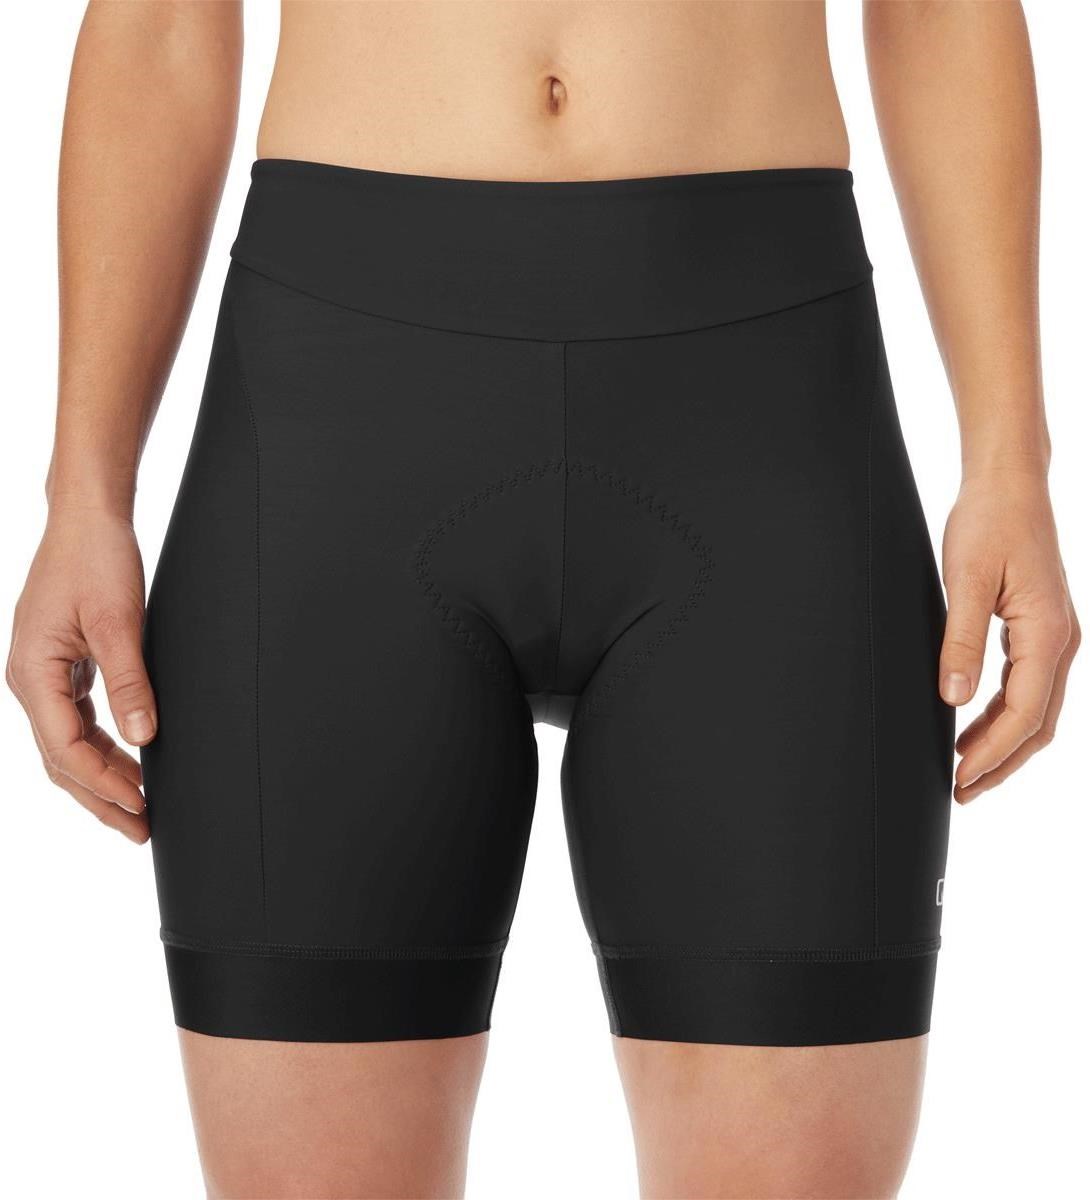 Giro Chrono Sport Womens Shorts product image